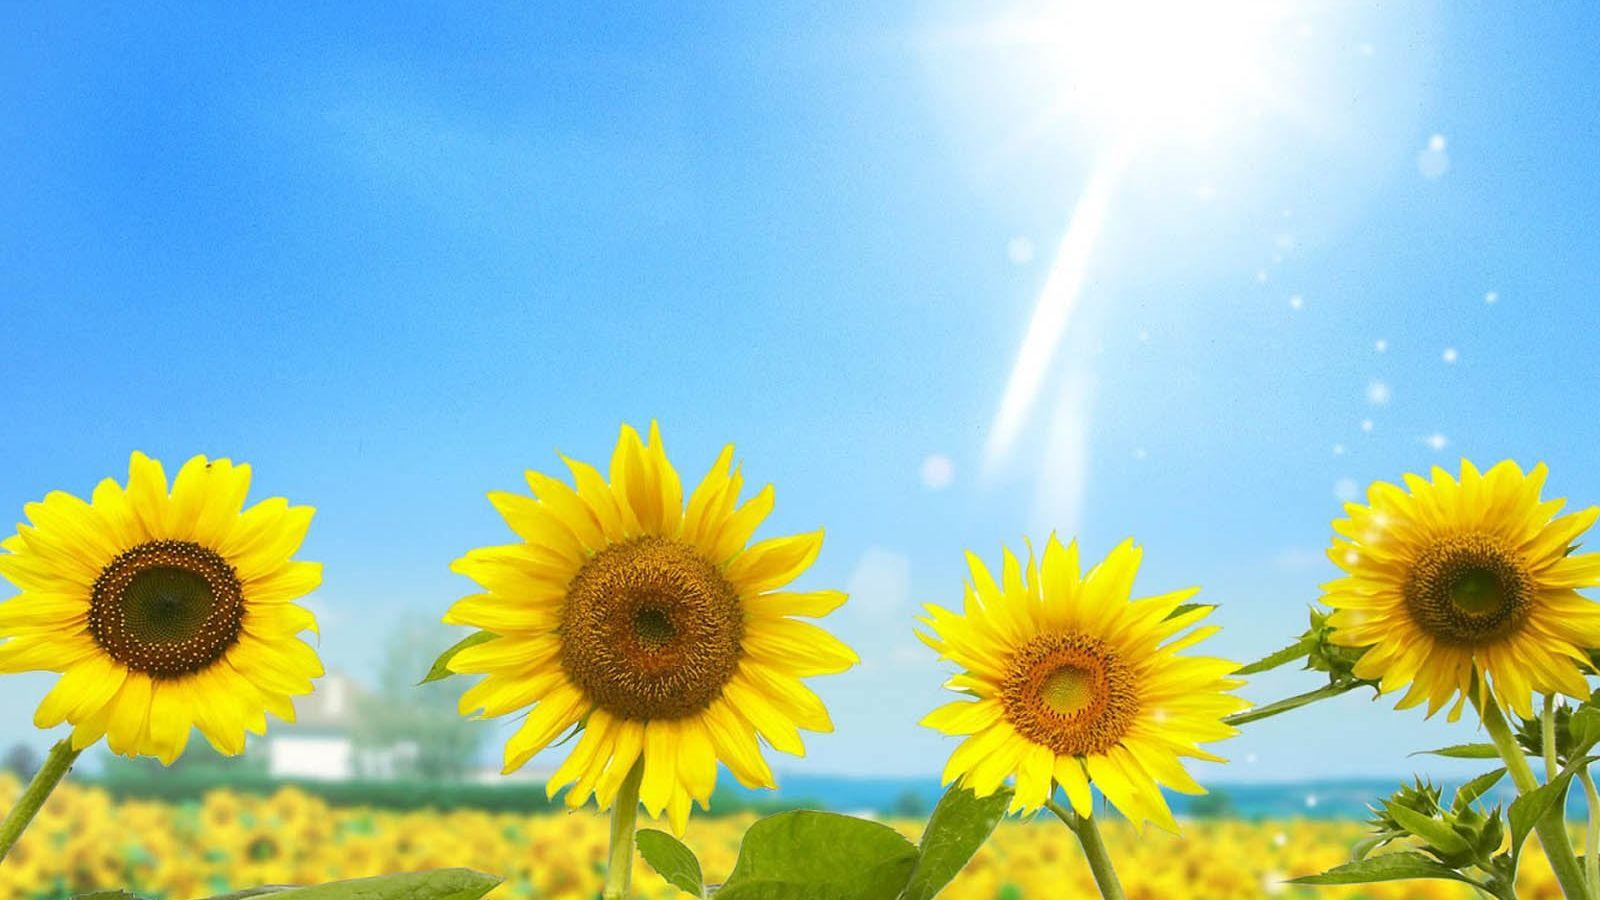 Beautiful Sunflower Wallpapers - Top Free Beautiful Sunflower ...